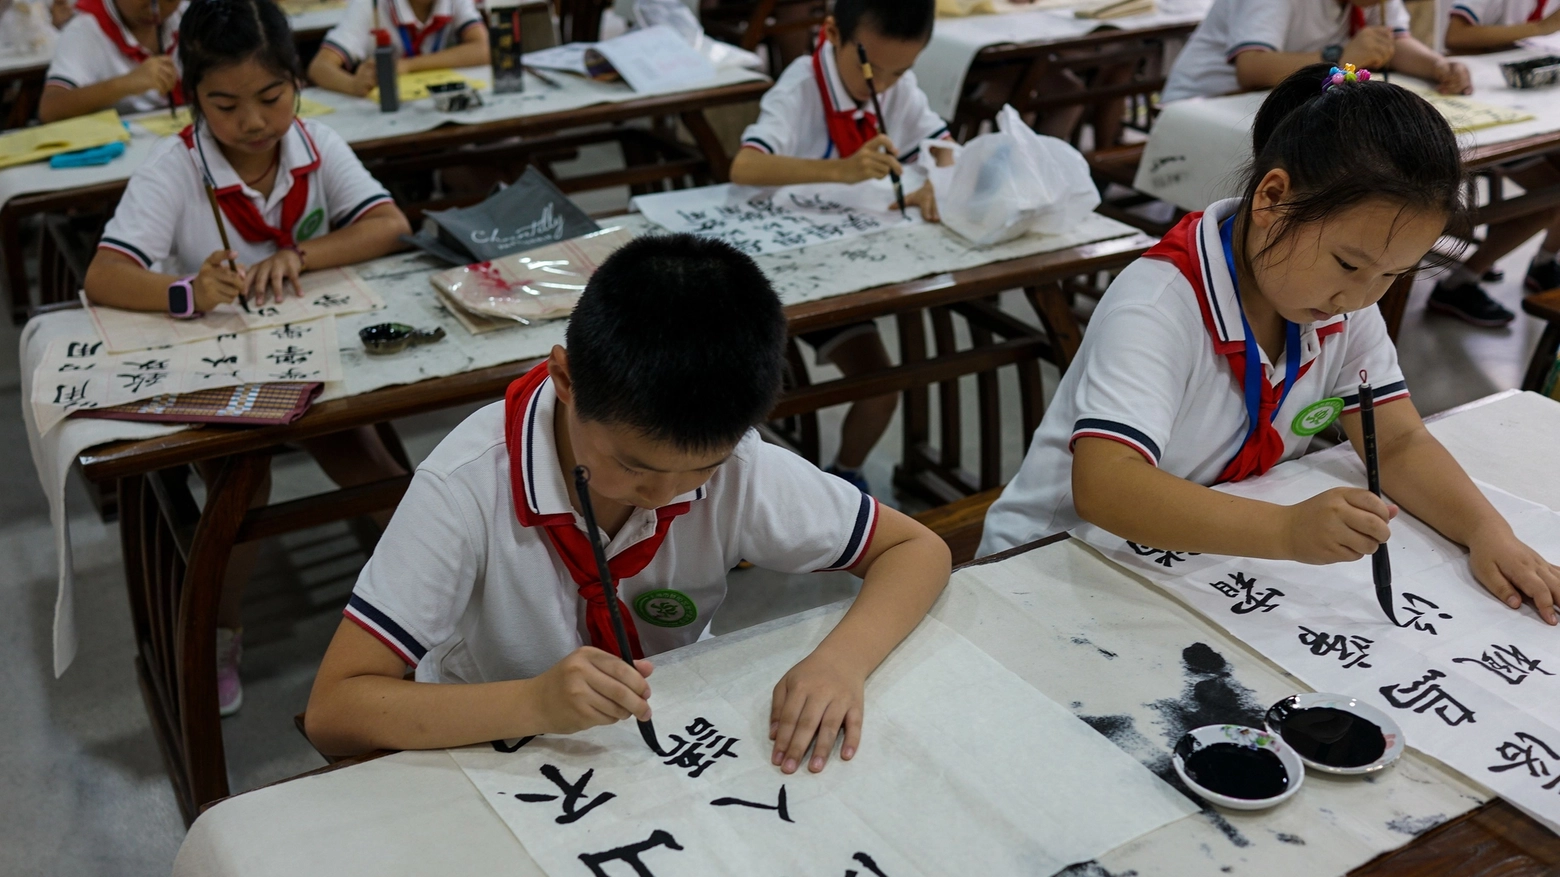 Riconoscimento facciale nelle scuole cinesi (Afp)